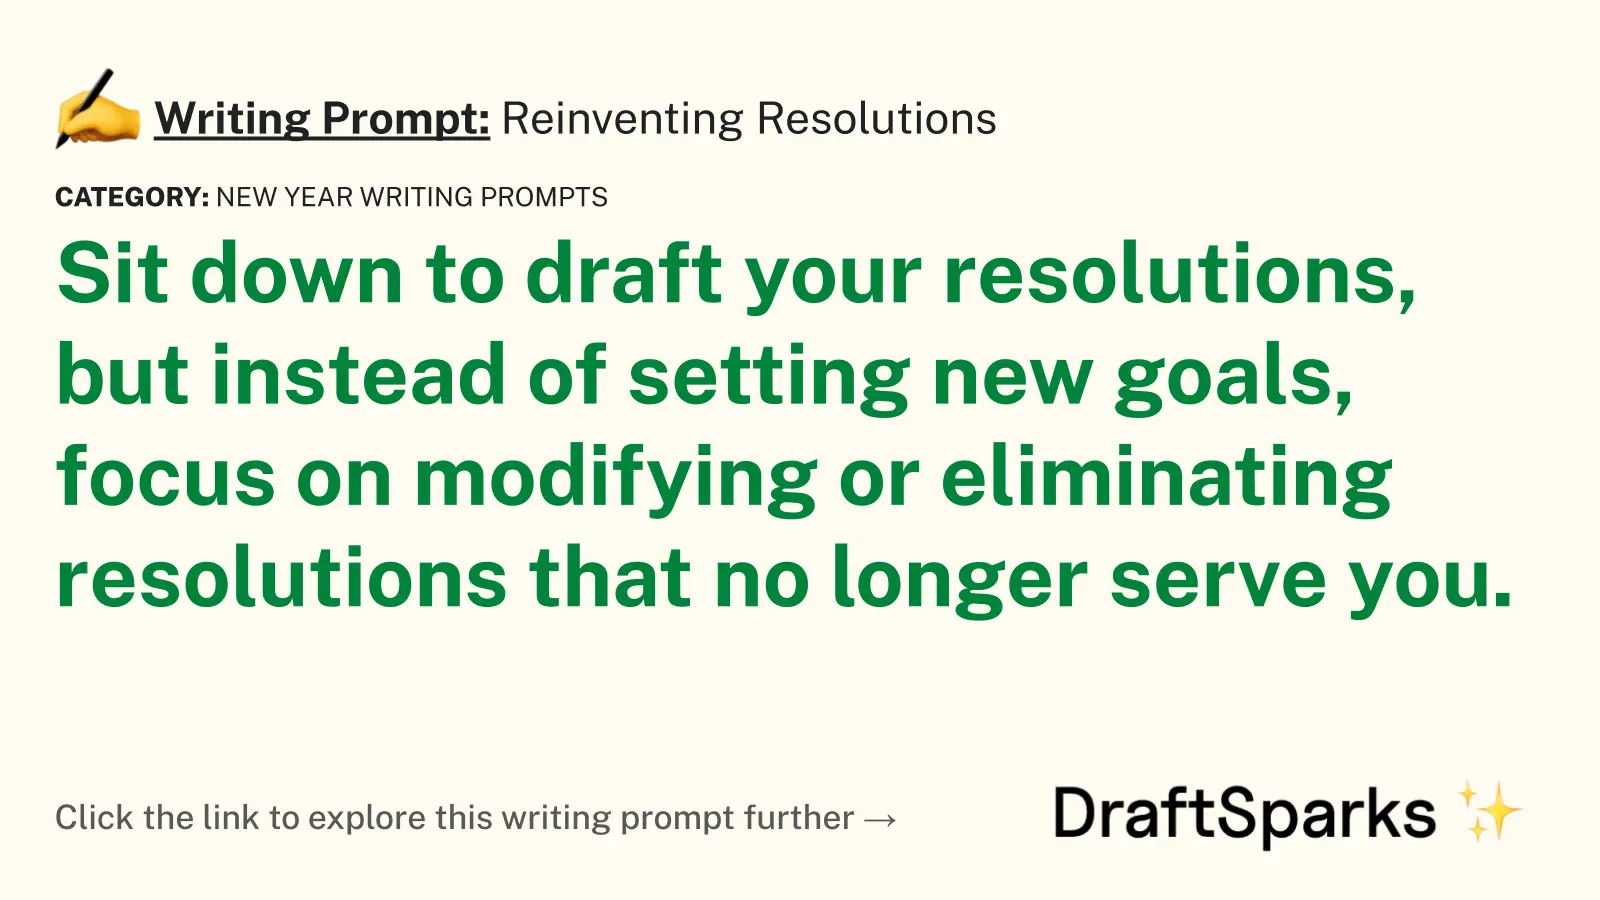 Reinventing Resolutions